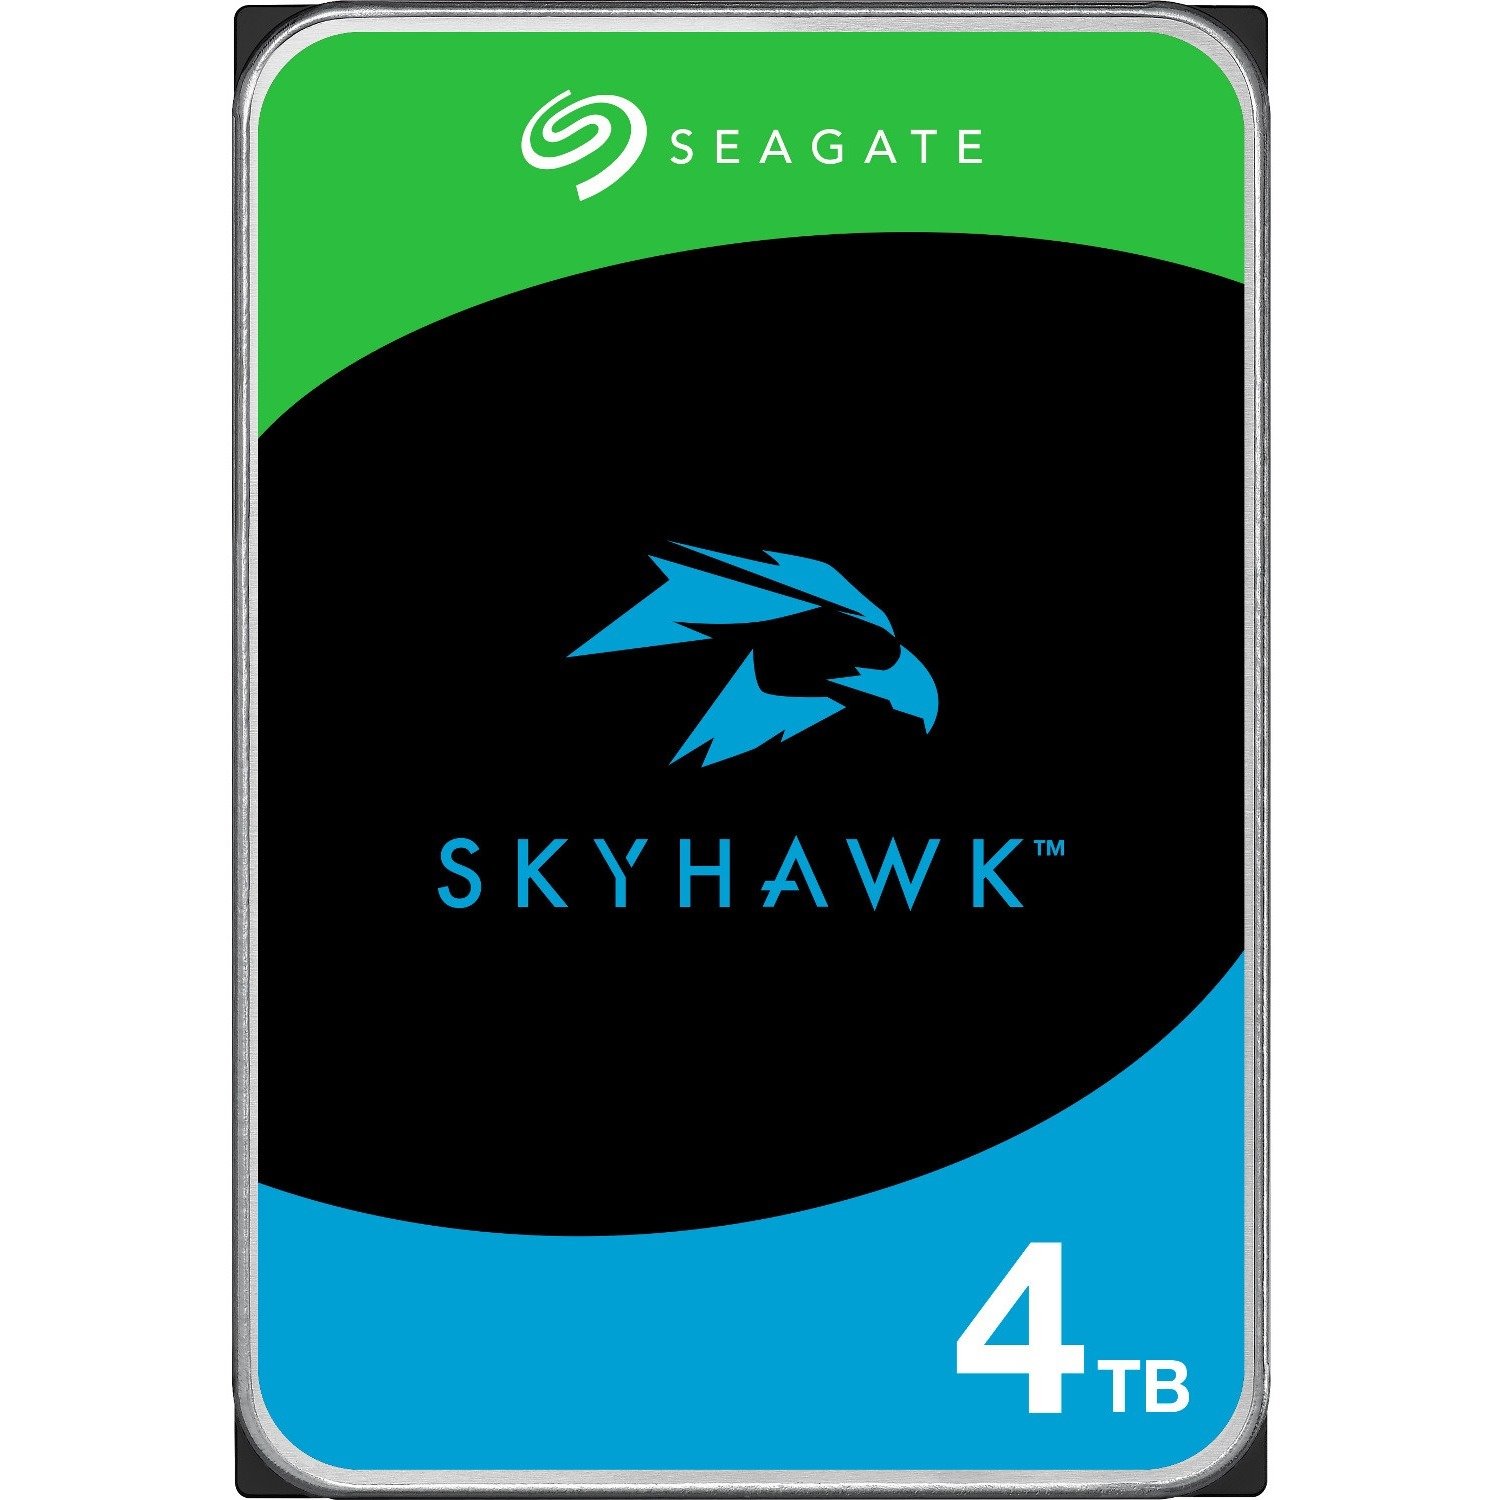 Seagate SkyHawk ST4000VX016 4 TB Hard Drive - 3.5" Internal - SATA (SATA/600) - Conventional Magnetic Recording (CMR) Method